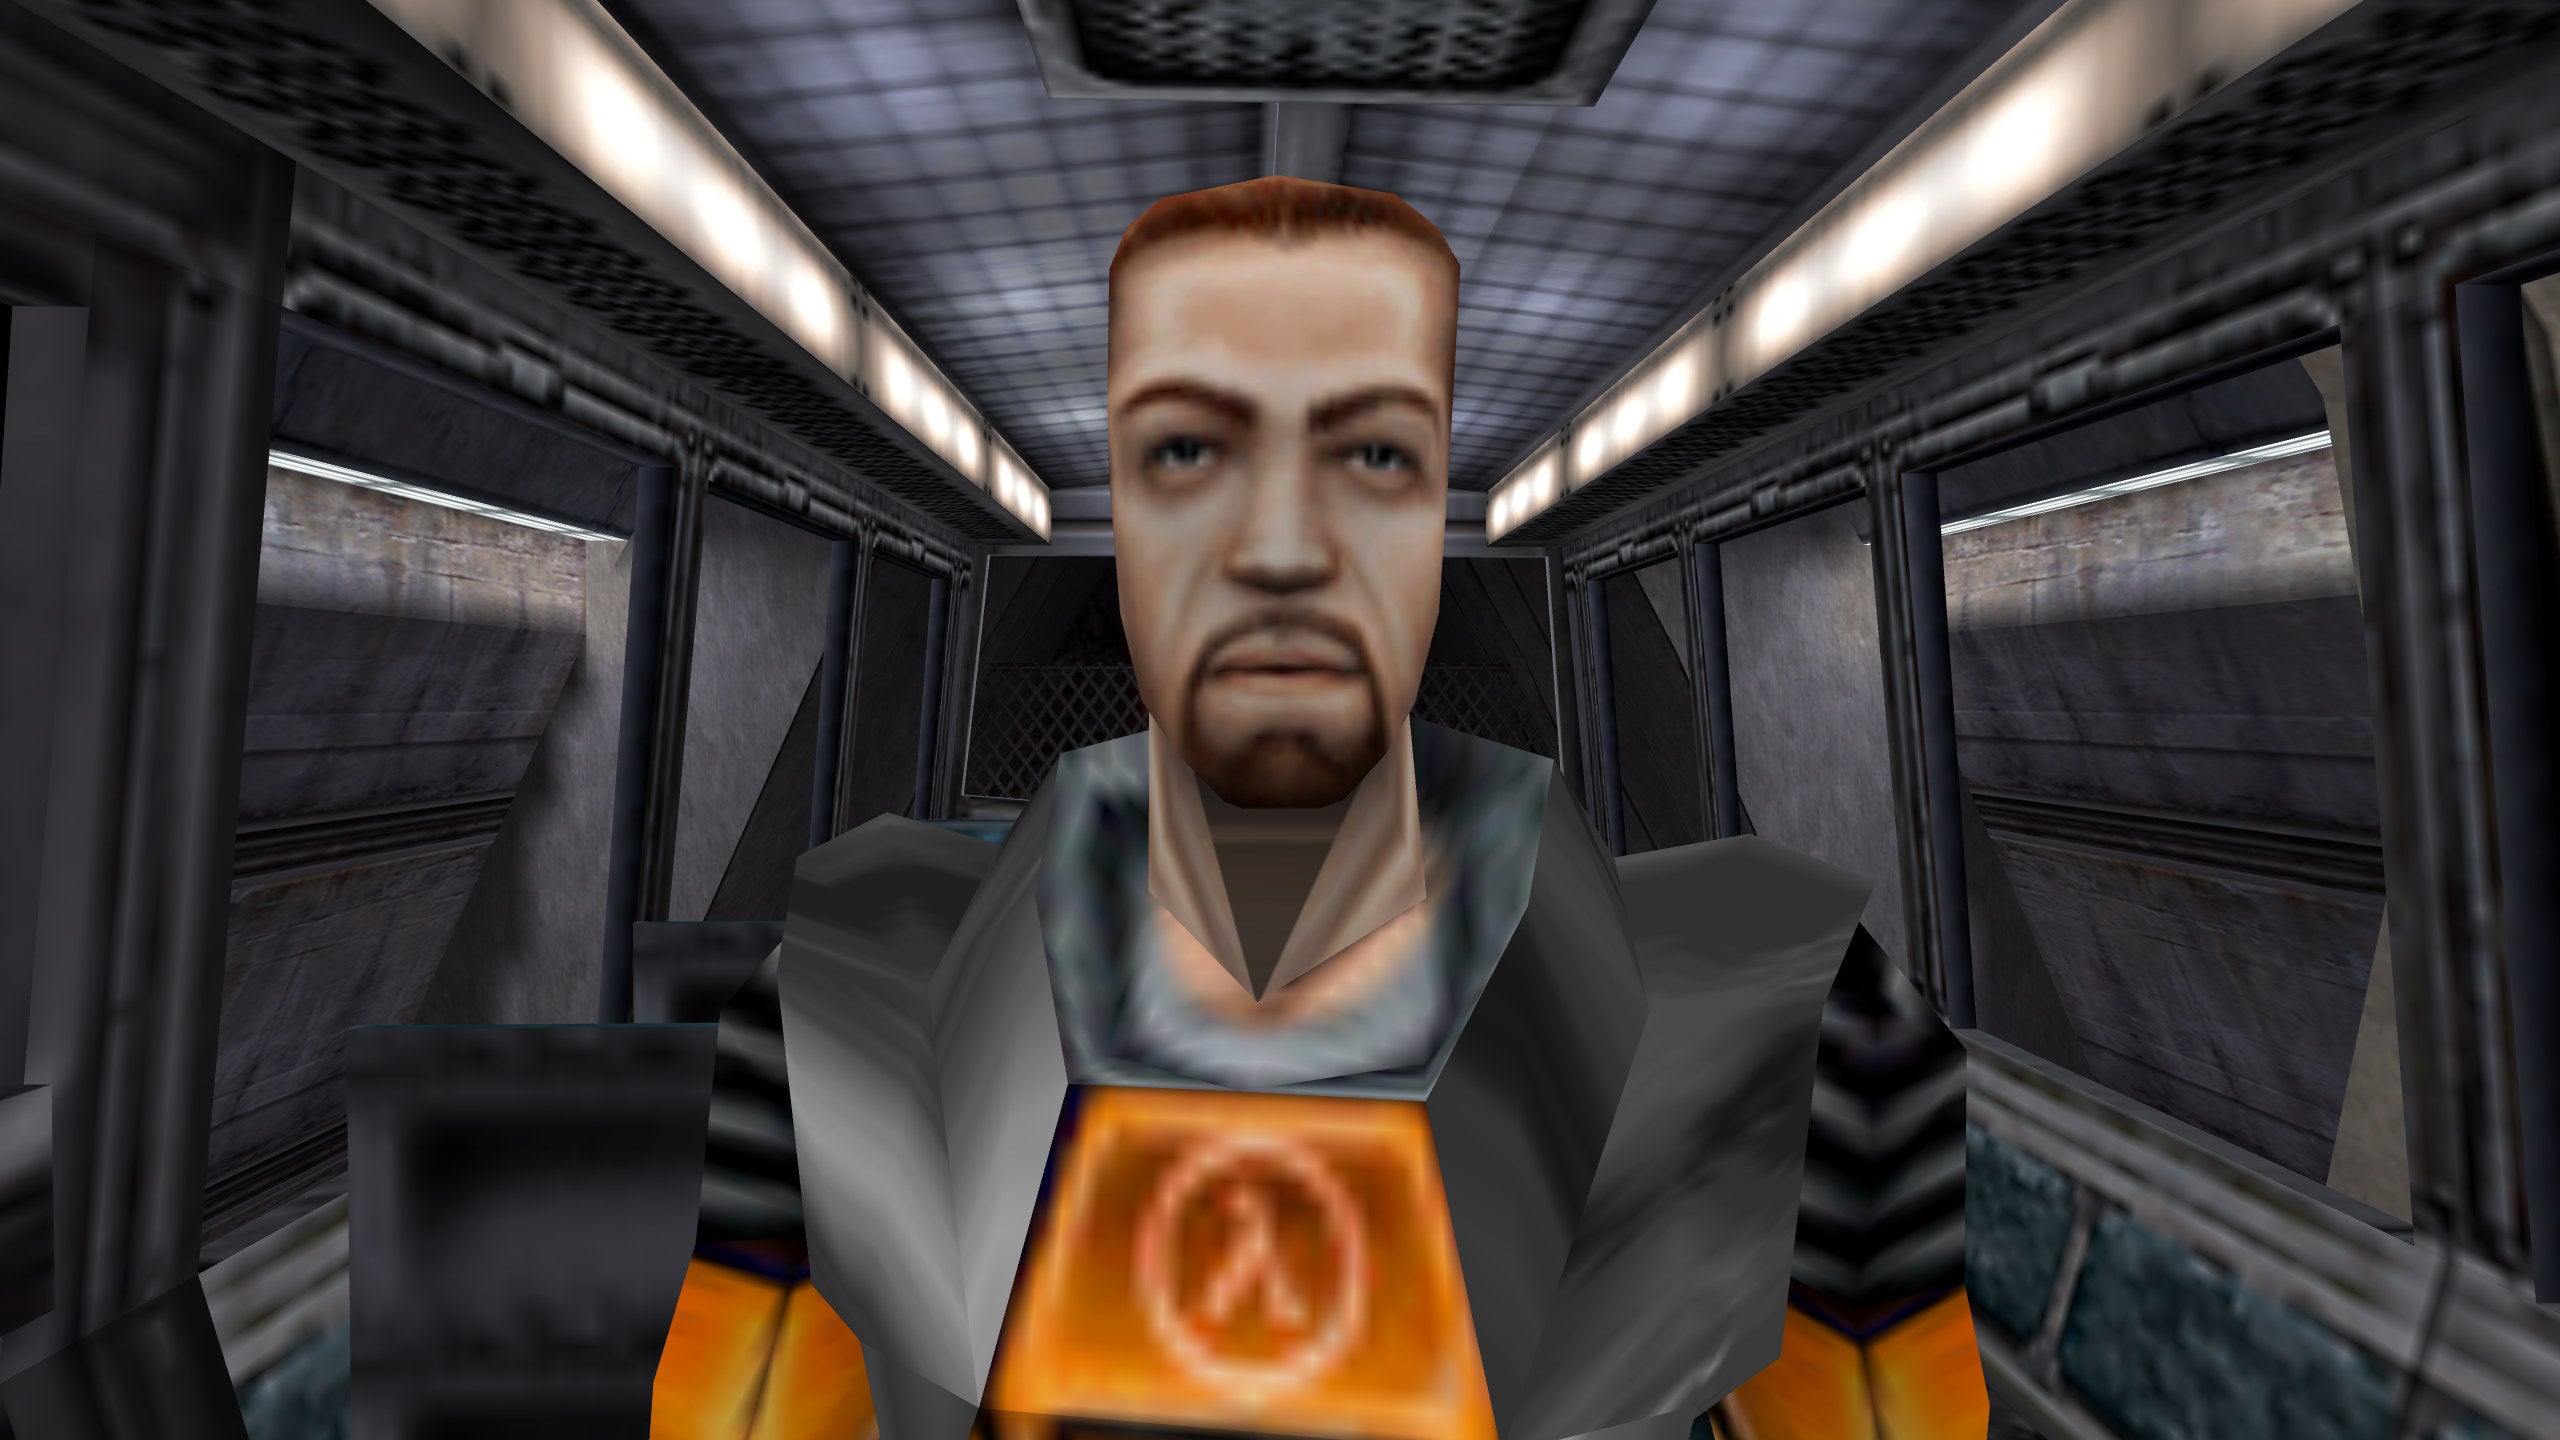 Gordon Freeman riding the tram in Half-Life's intro.